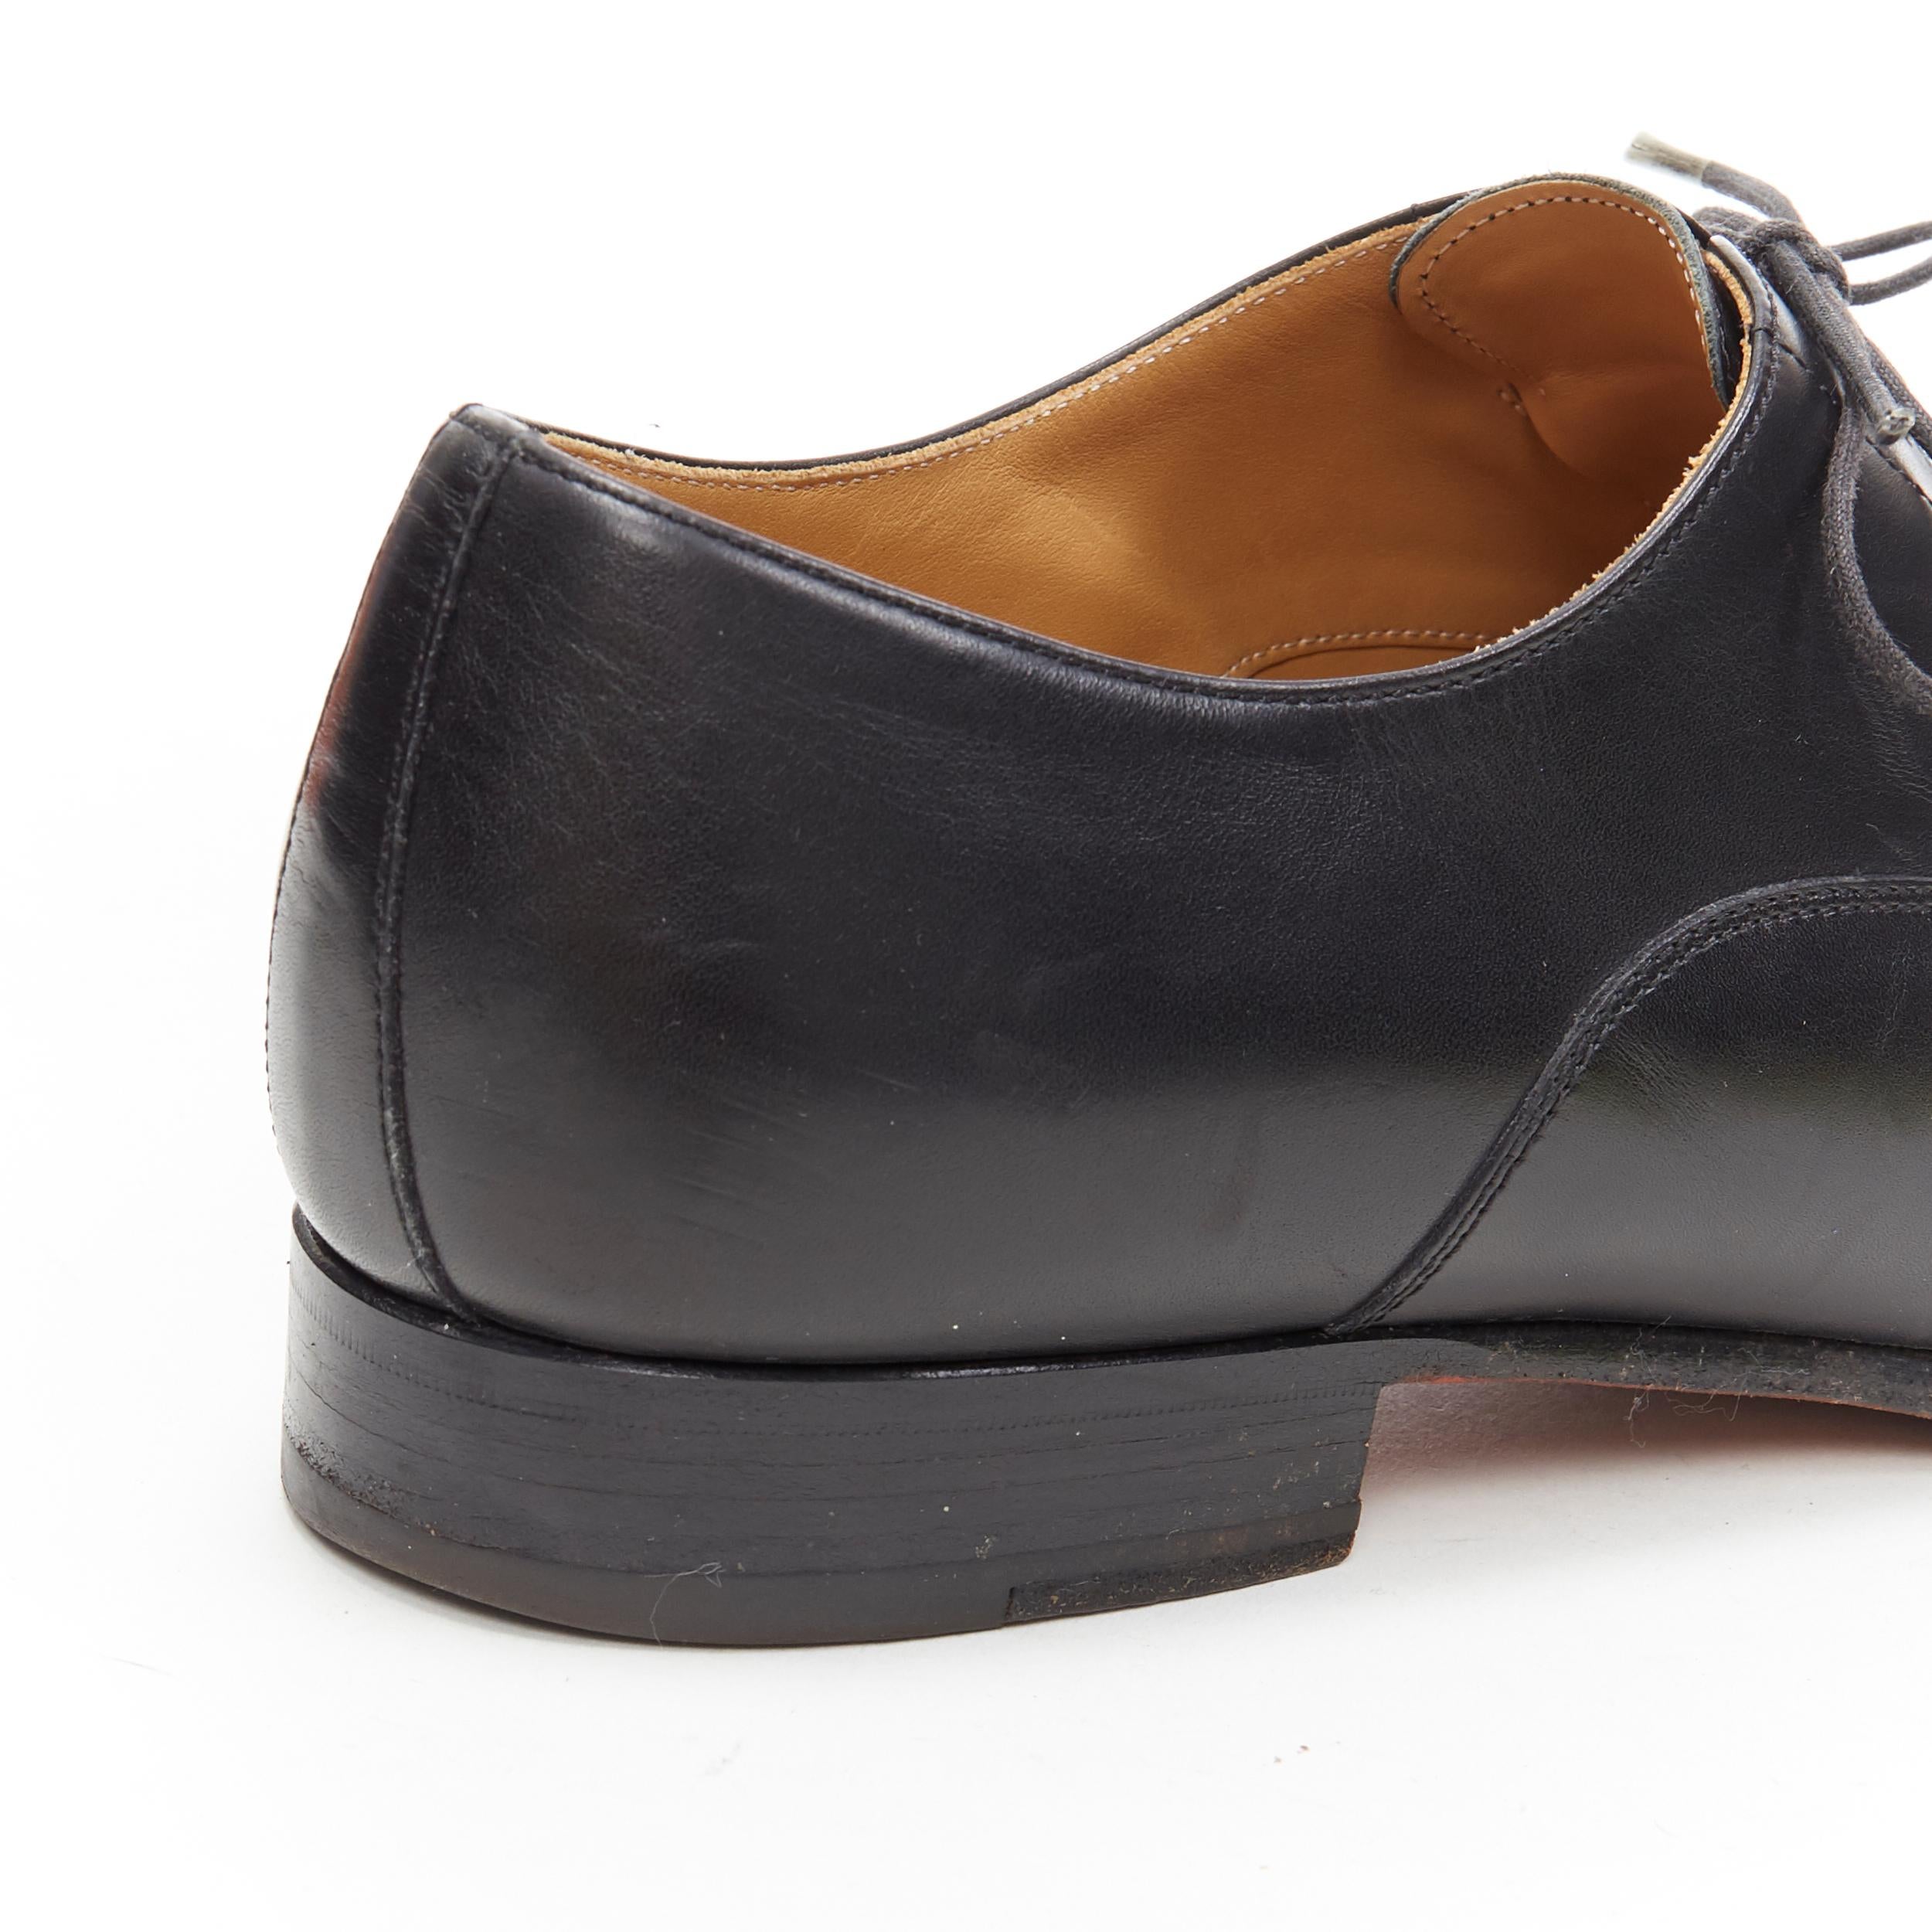 HERMES black calf leather 5-eyelet lace up derby oxford dress shoes EU43.5 5